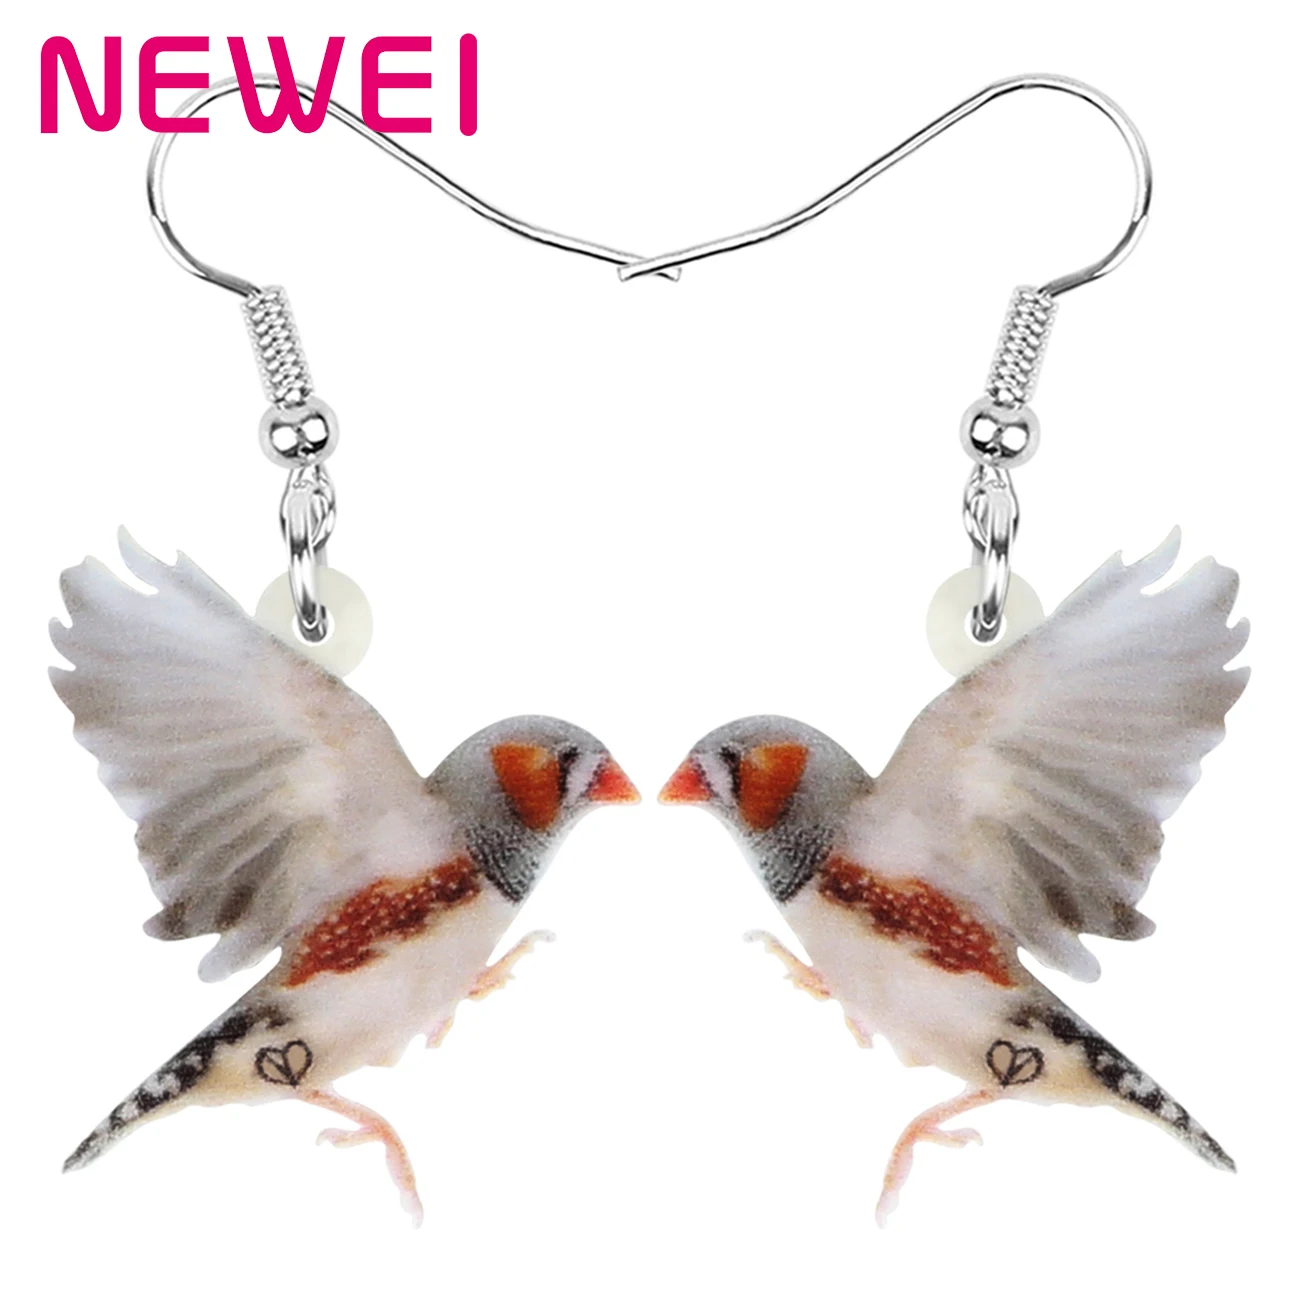 

Acrylic Cute Australasia Zebra Finch Earrings Birds Drop Dangle Fashion Jewelry For Women Girls Kids Teens Novelty Charms Gifts, Brown